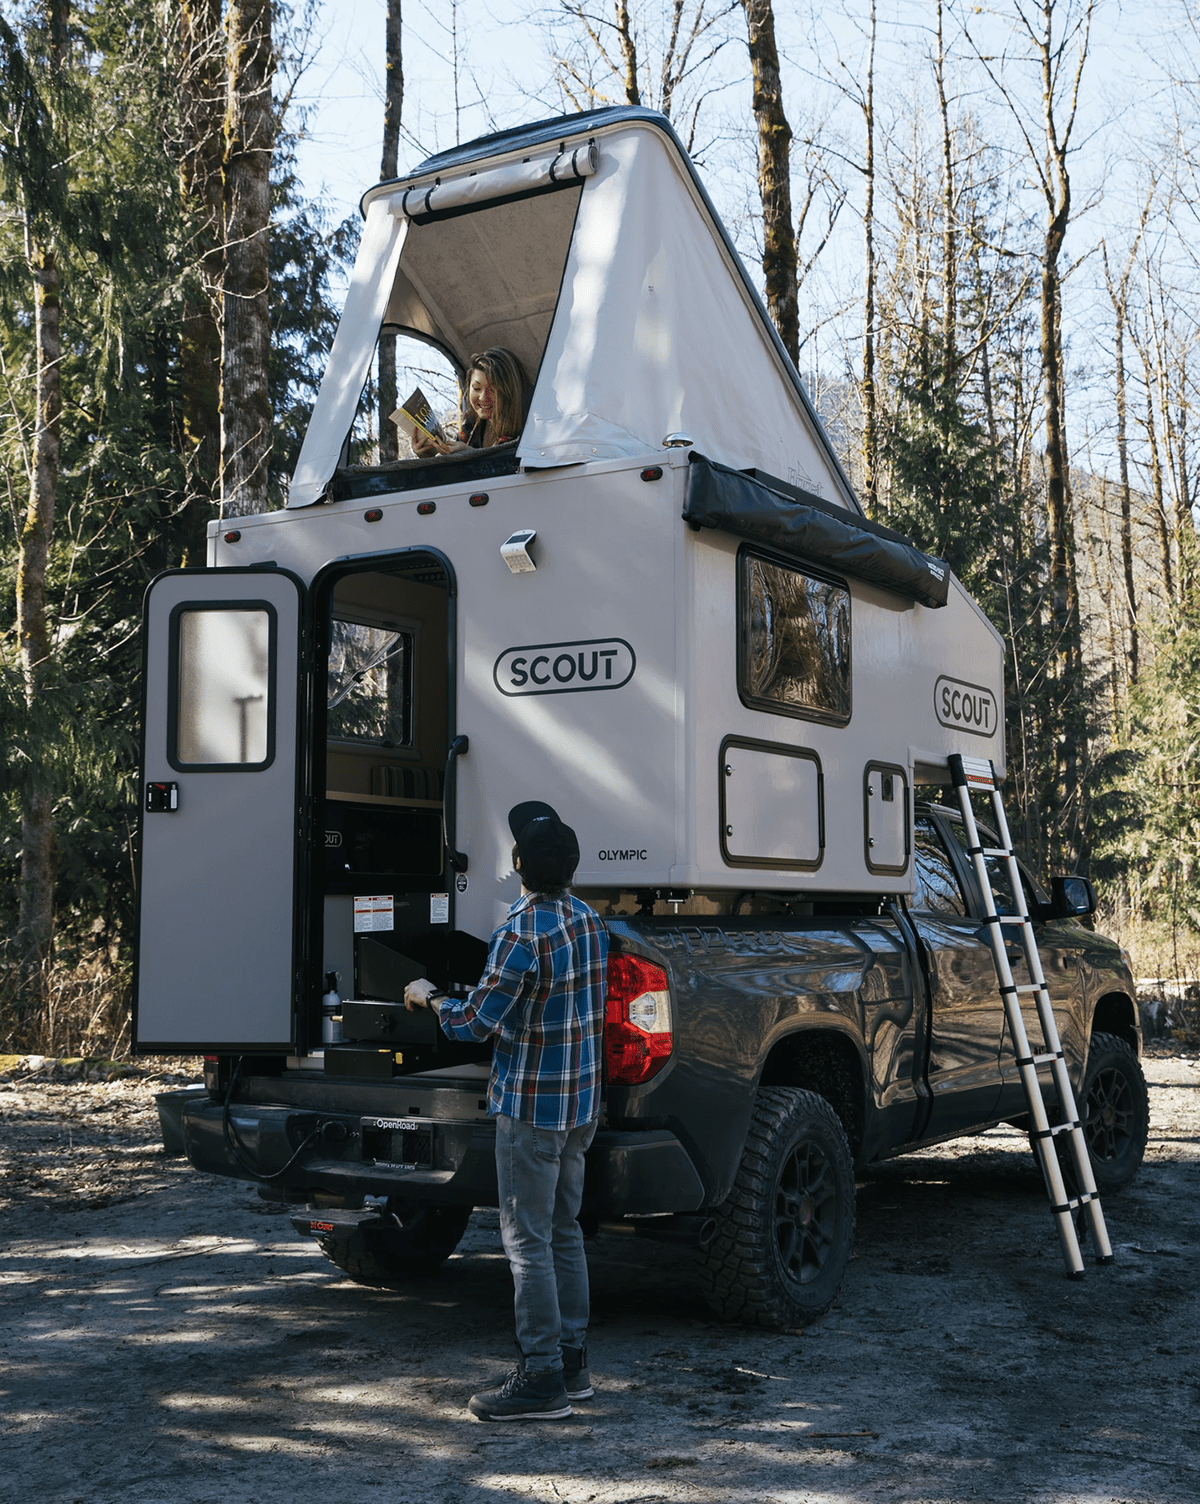 camping Travel exterior design RV Truck camper